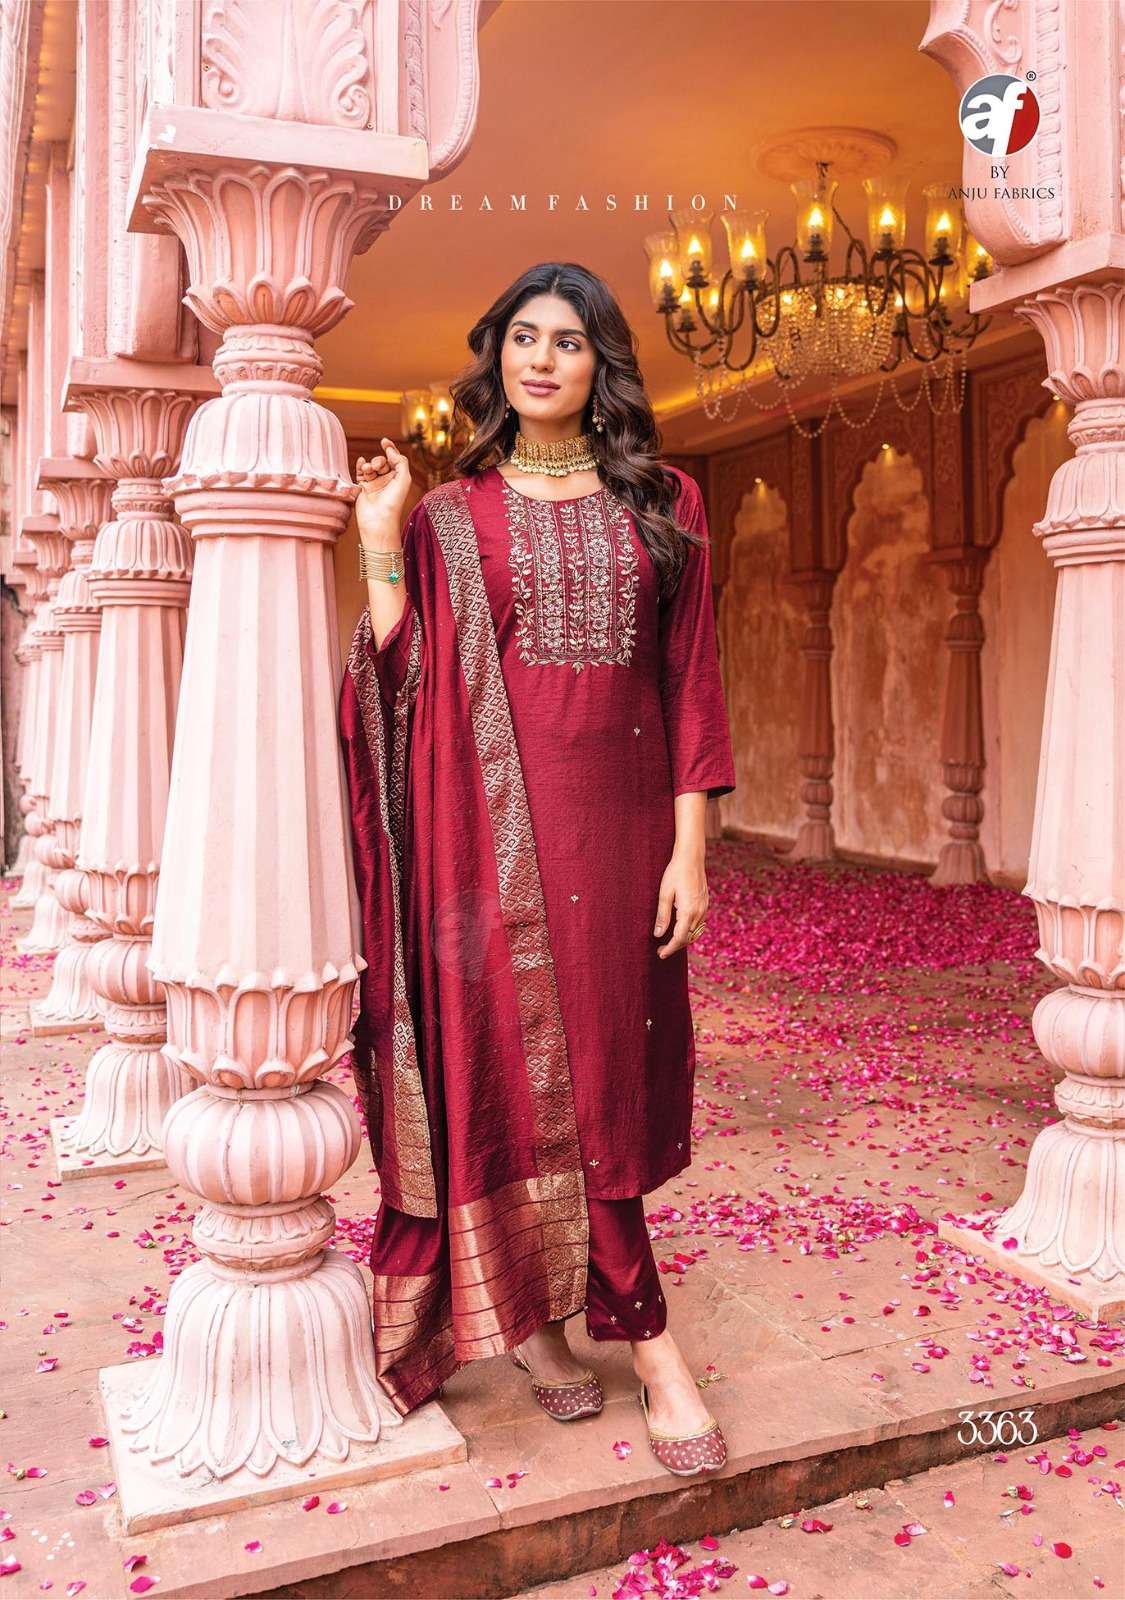 anju fabrics ghunghat vol-9 3361-3366 series latest designer kurti set wholesaler surat gujarat